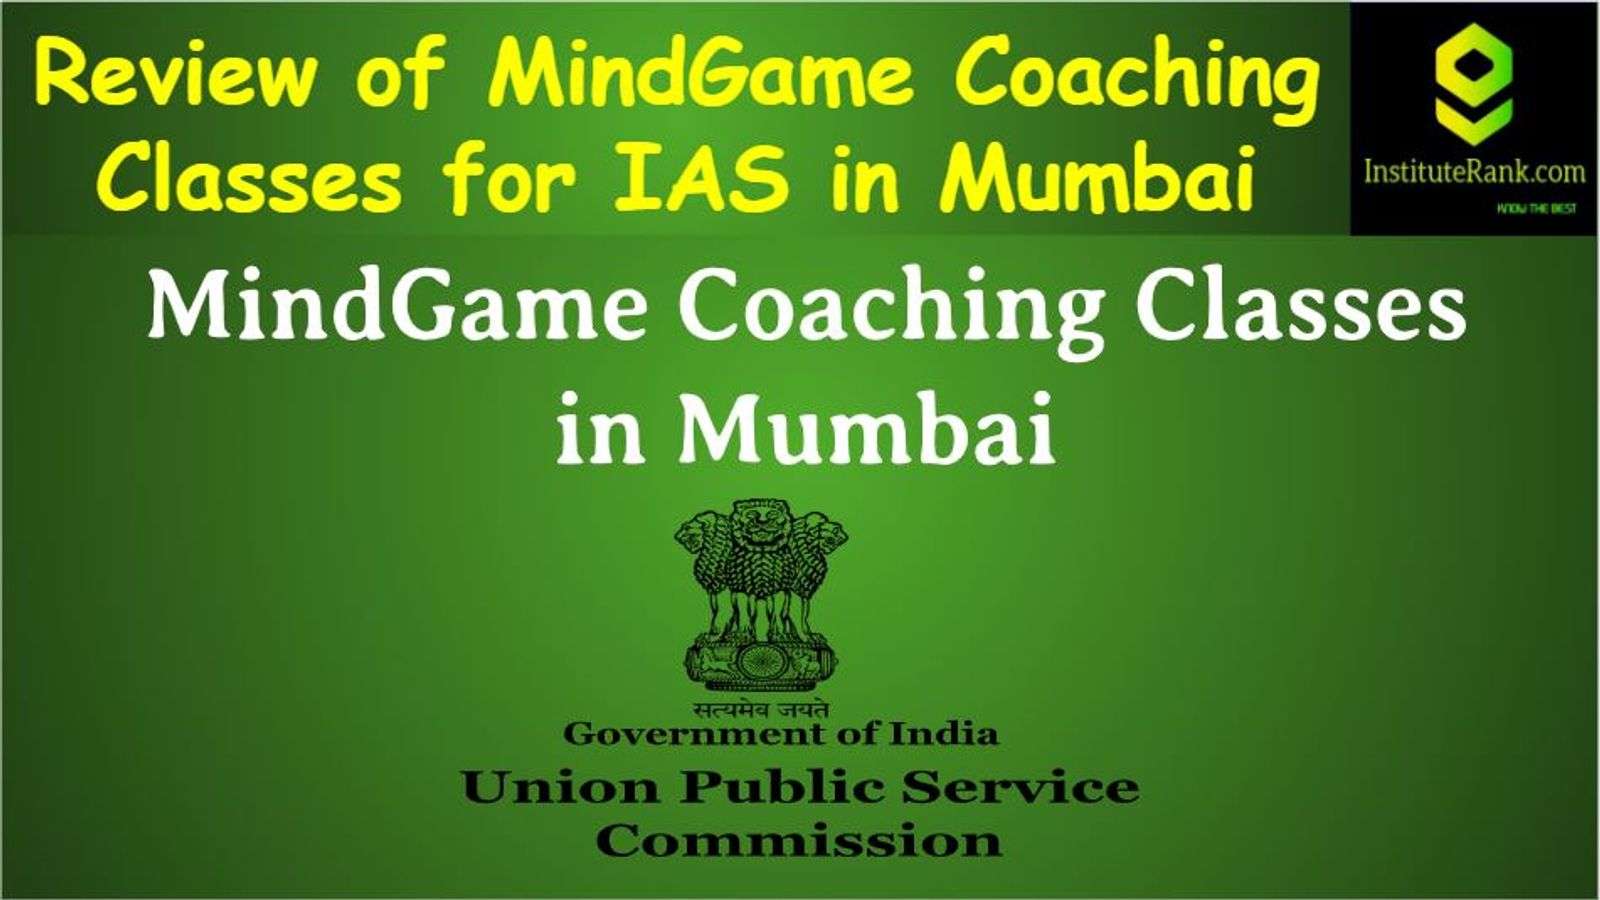 MindGame Coaching Classes for UPSC in Mumbai Review